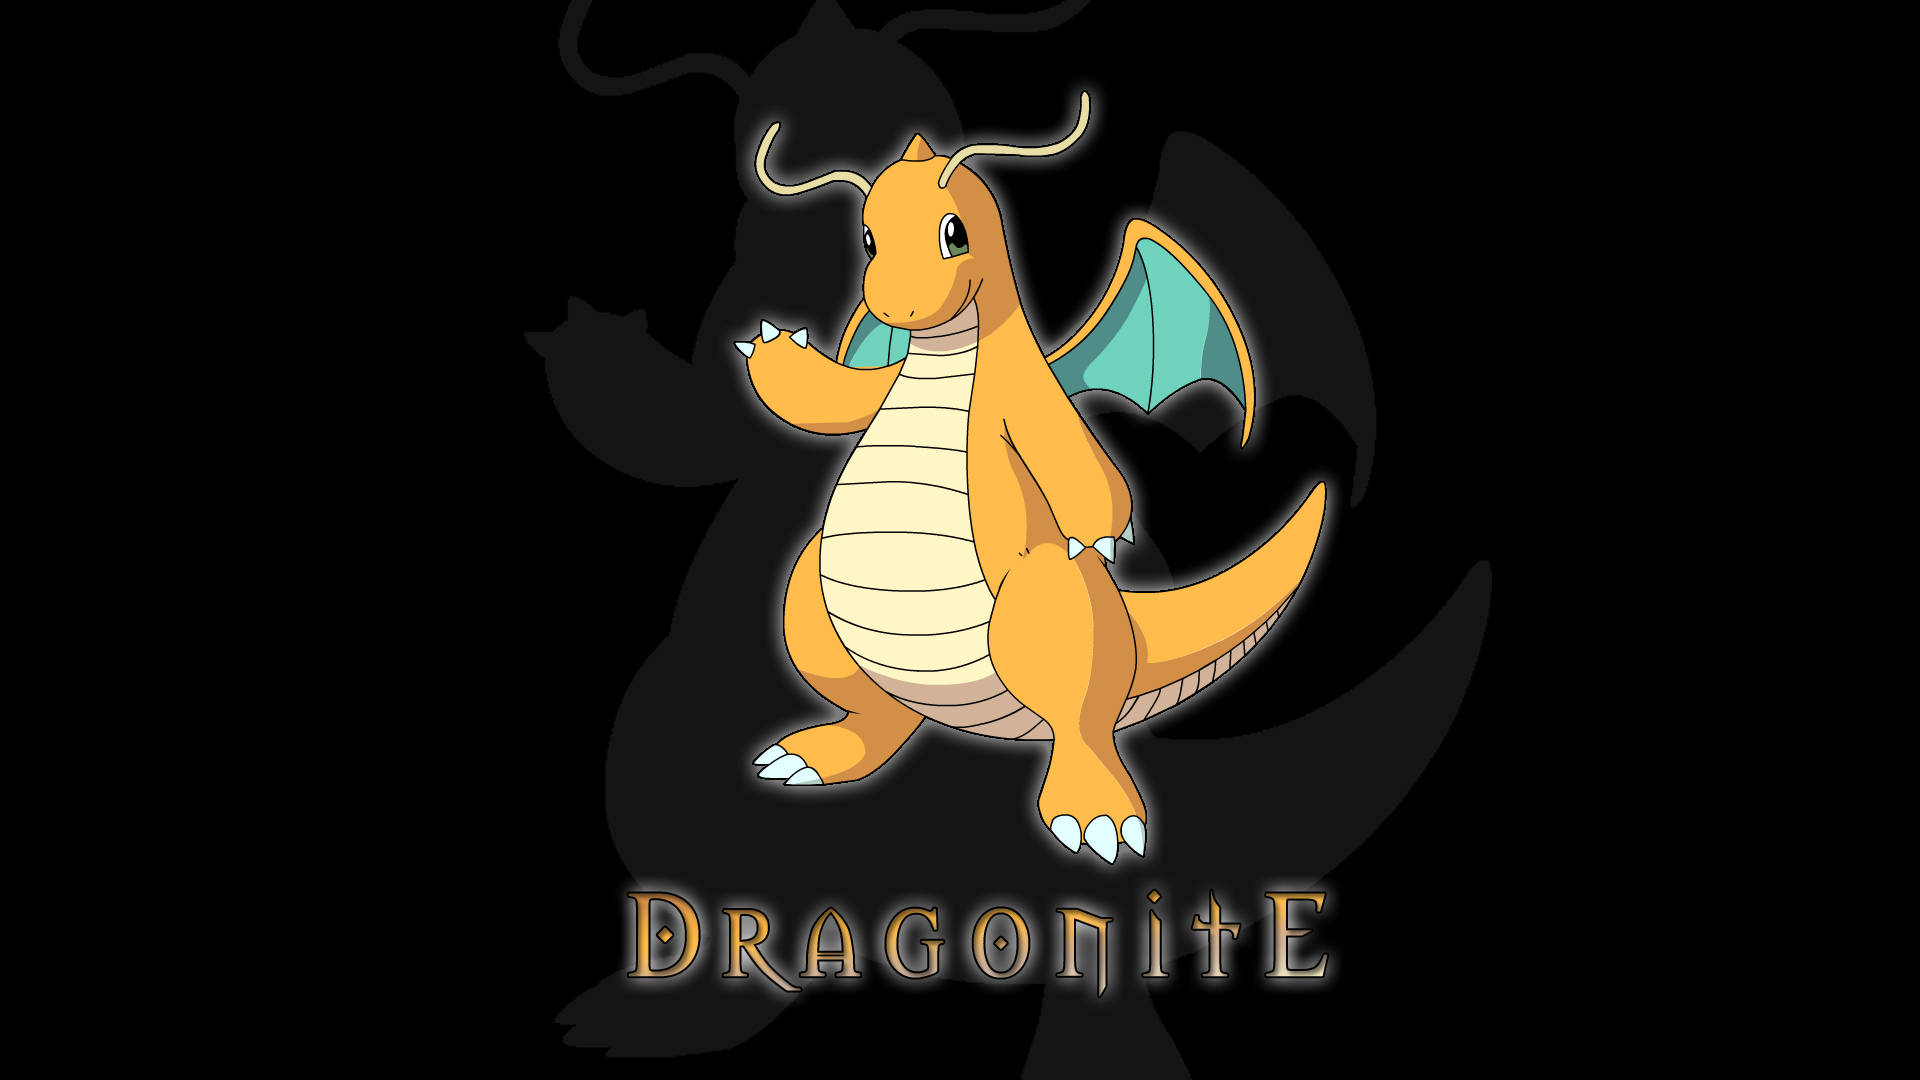 Cool Dragonite Design Background